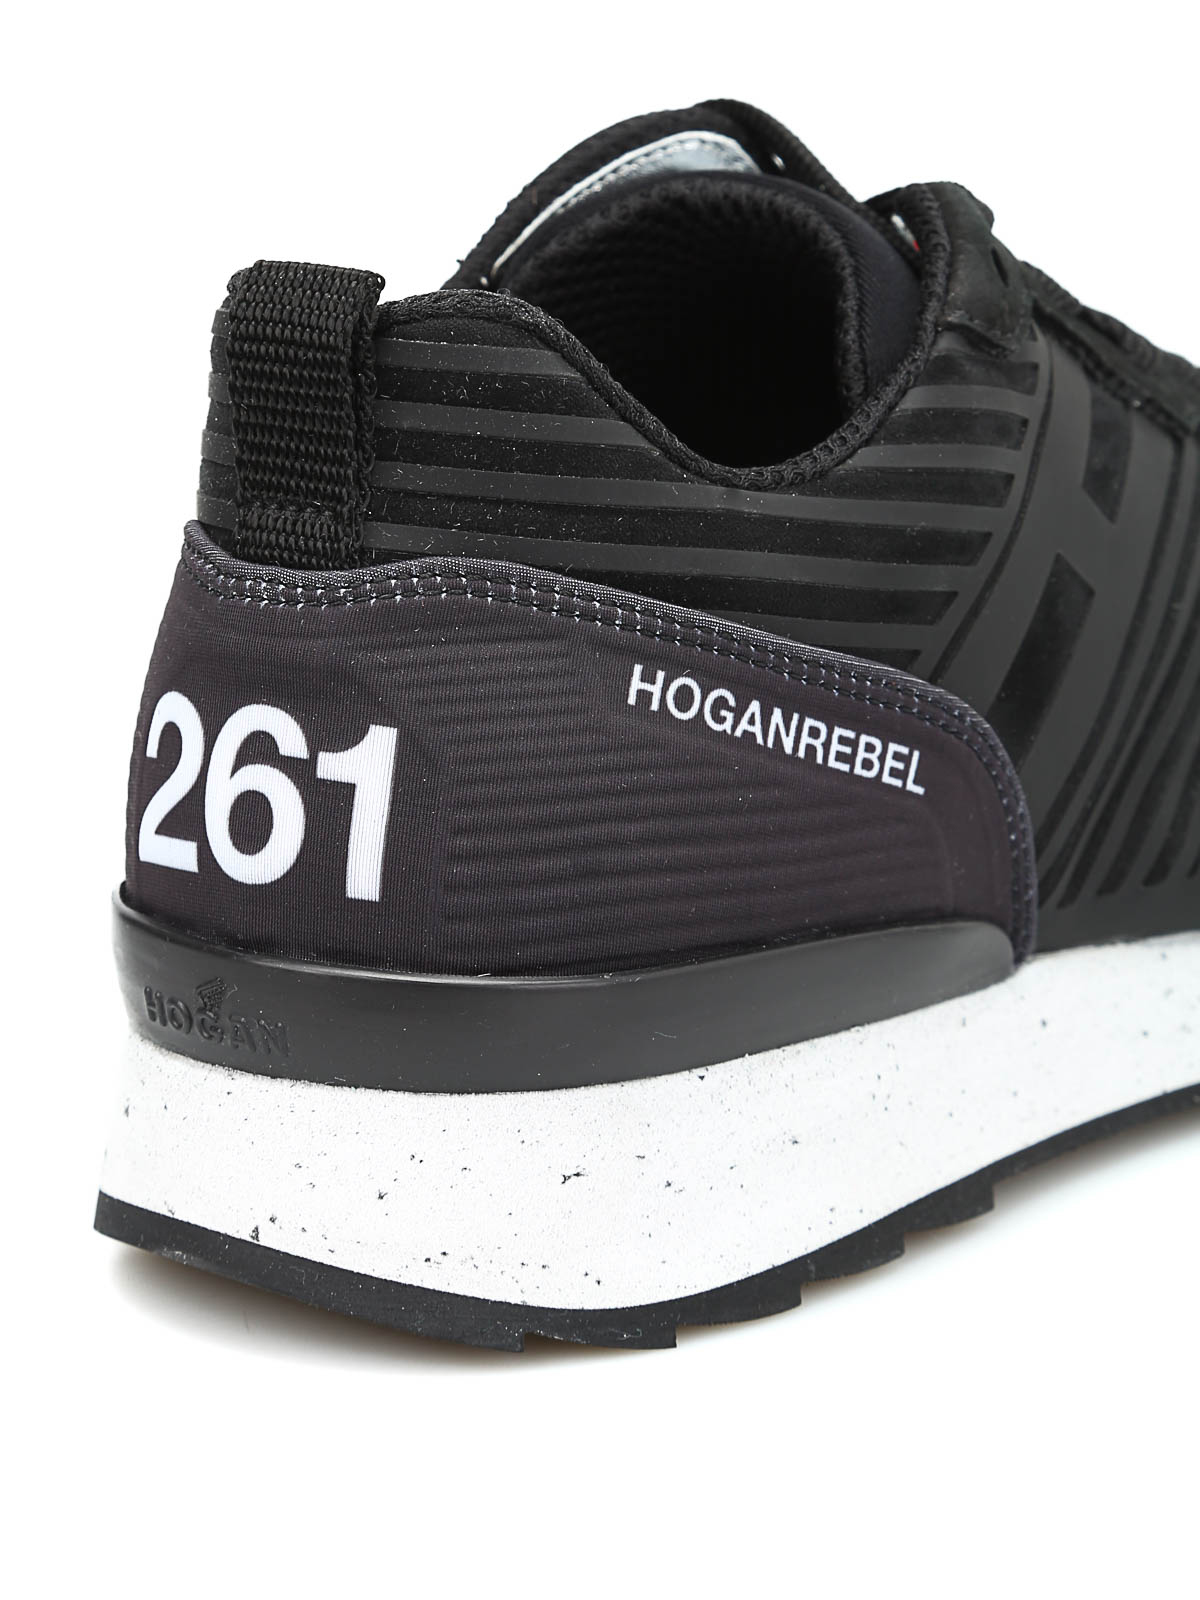 Hogan Rebel - Sneaker R261 3D - sneakers - HXM2610W500ESB0353 | iKRIX.com